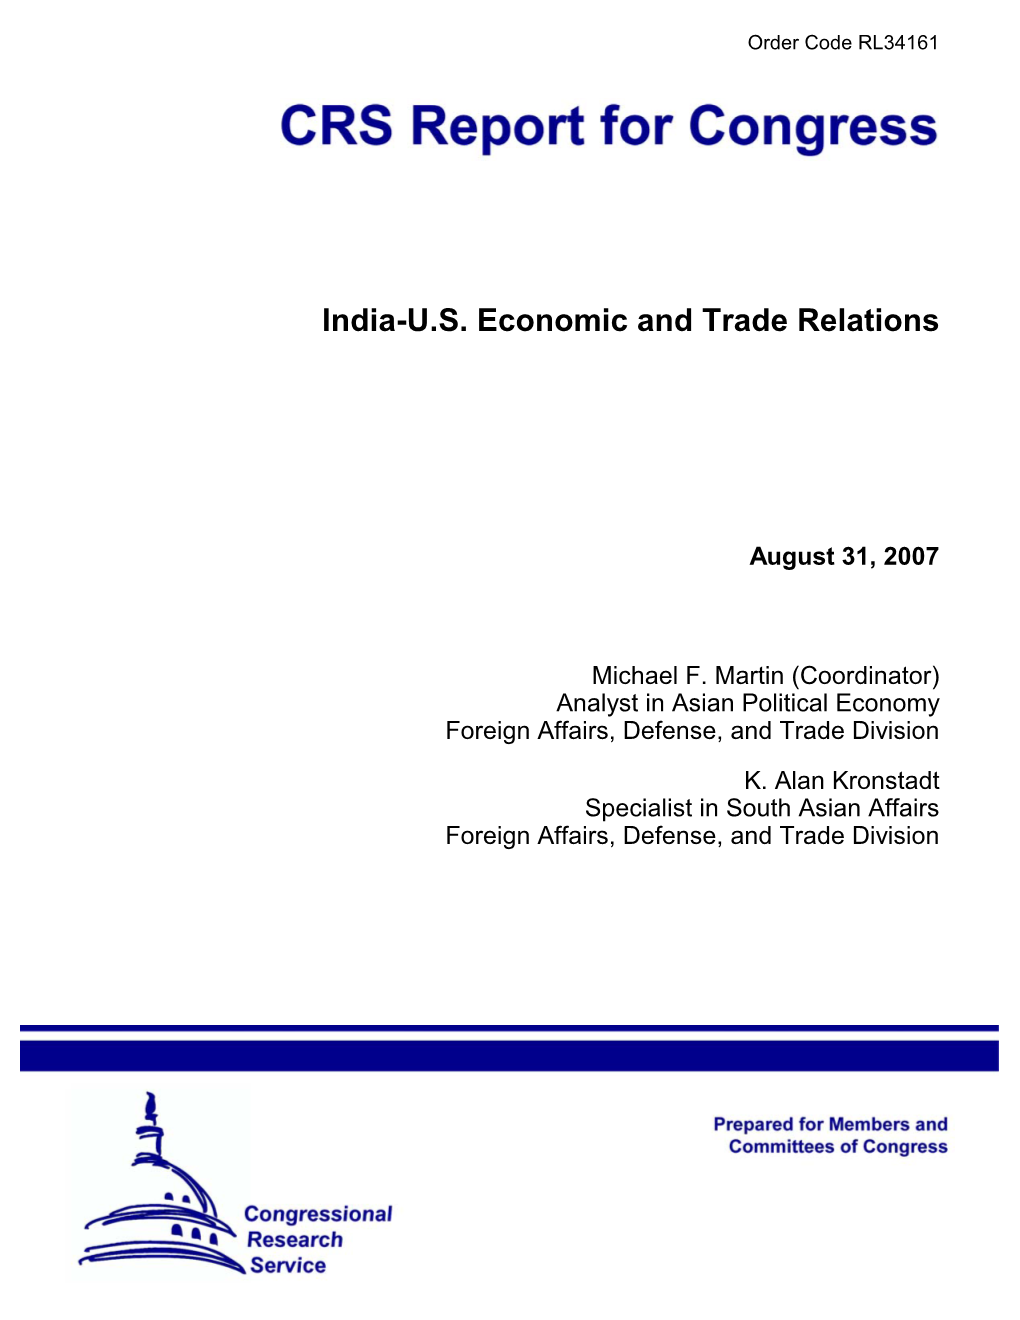 India-U.S. Economic and Trade Relations